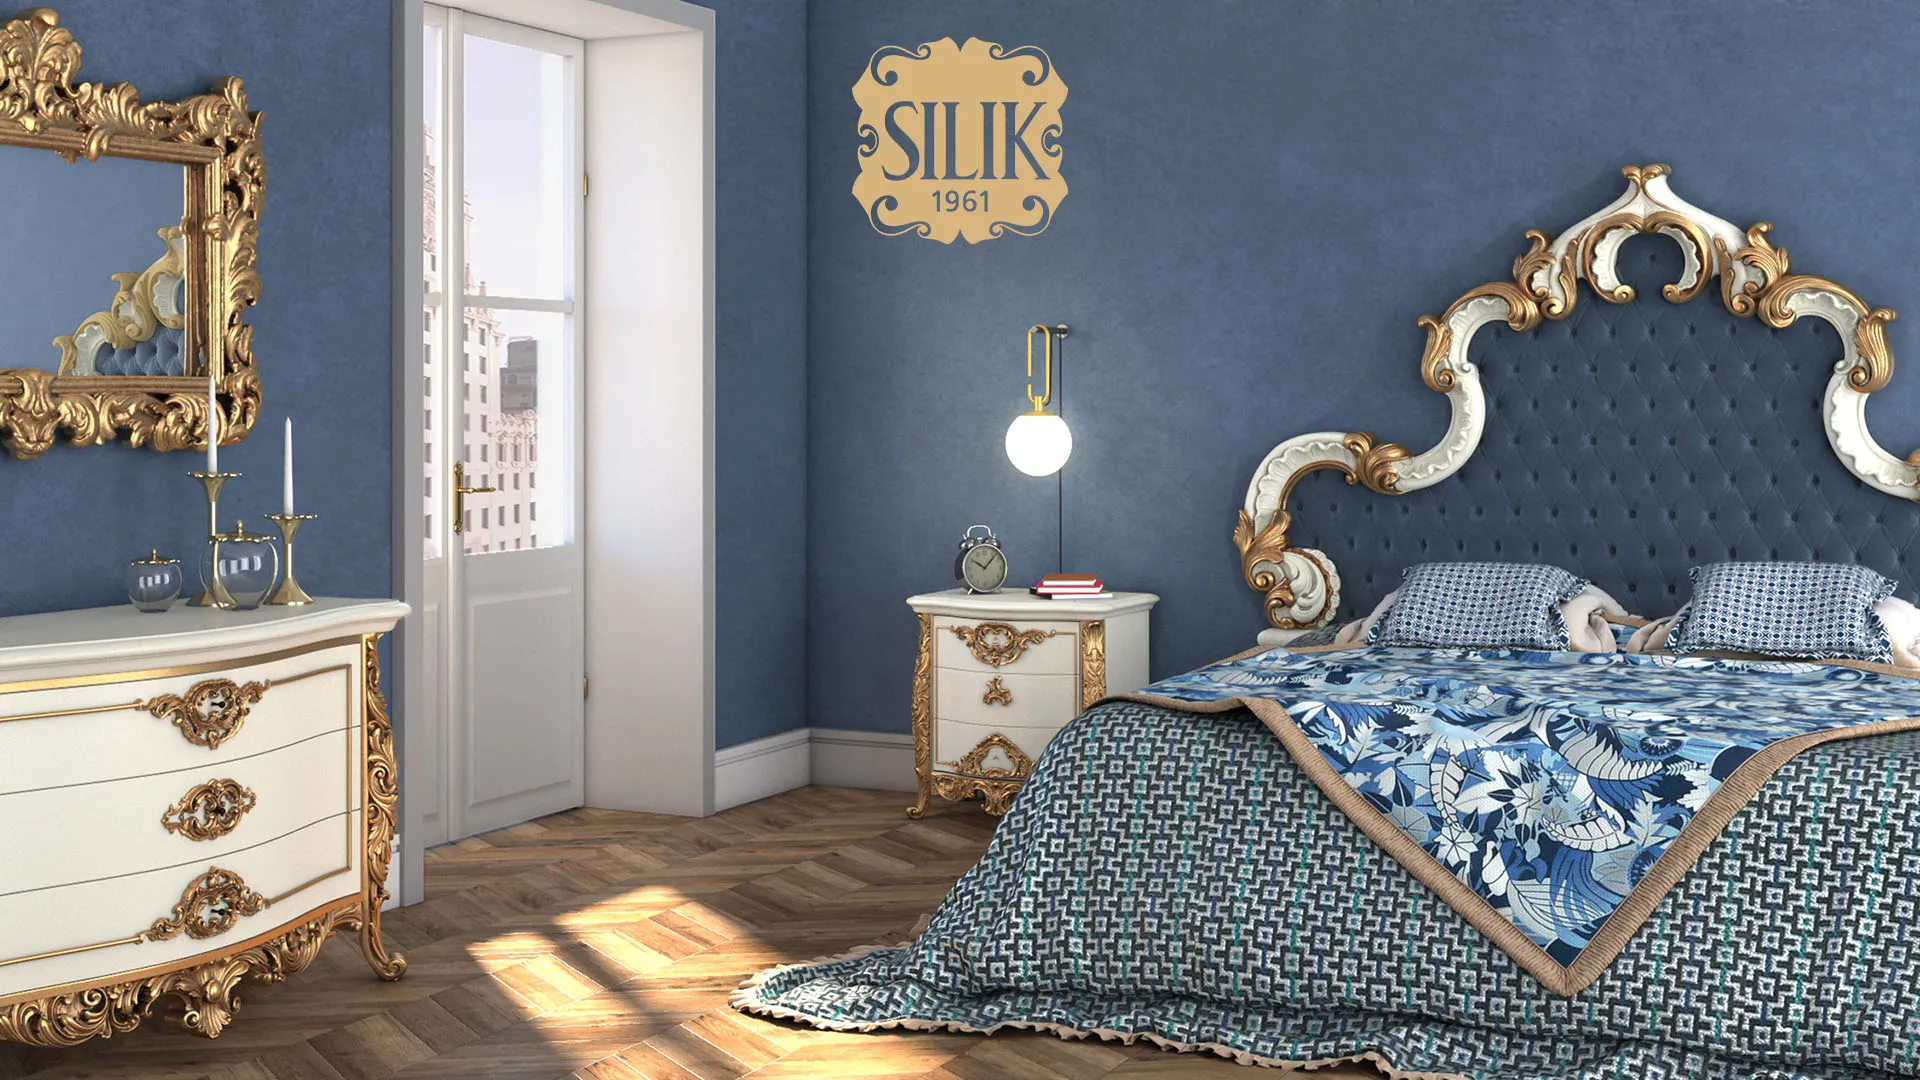 Silik bedroom